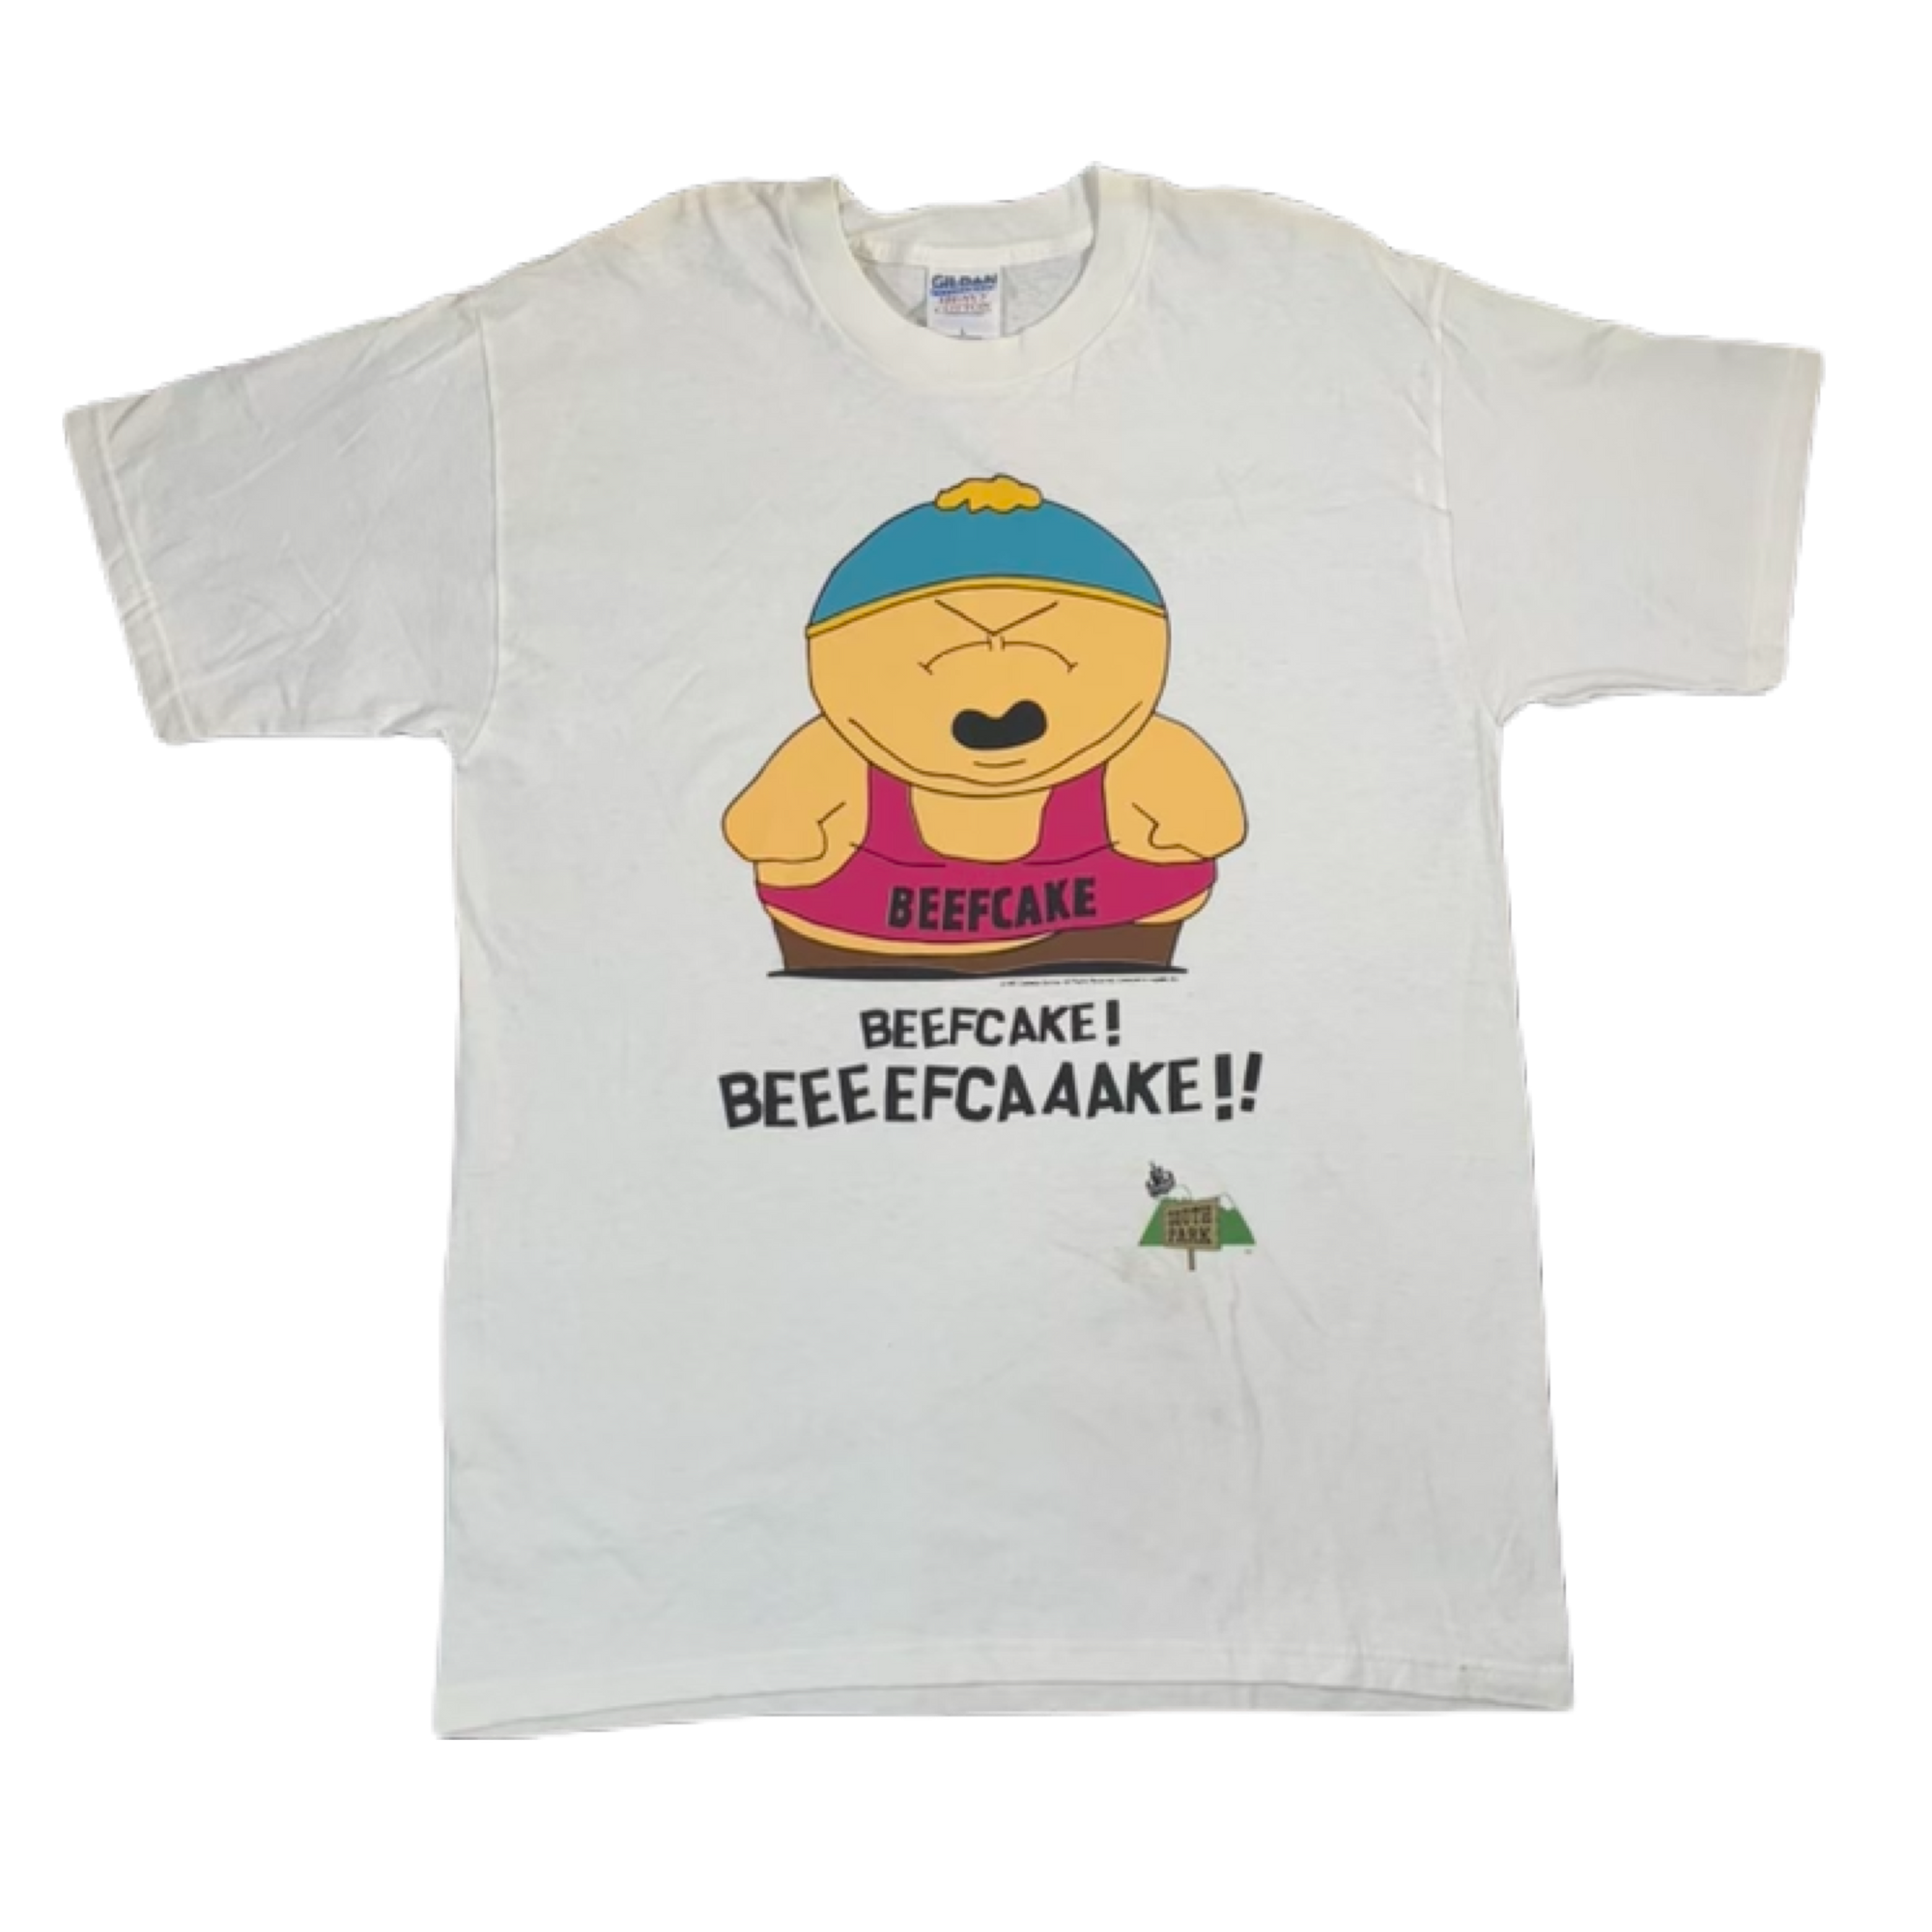 Vintage South Park "Beefcake" T-Shirt - jointcustodydc